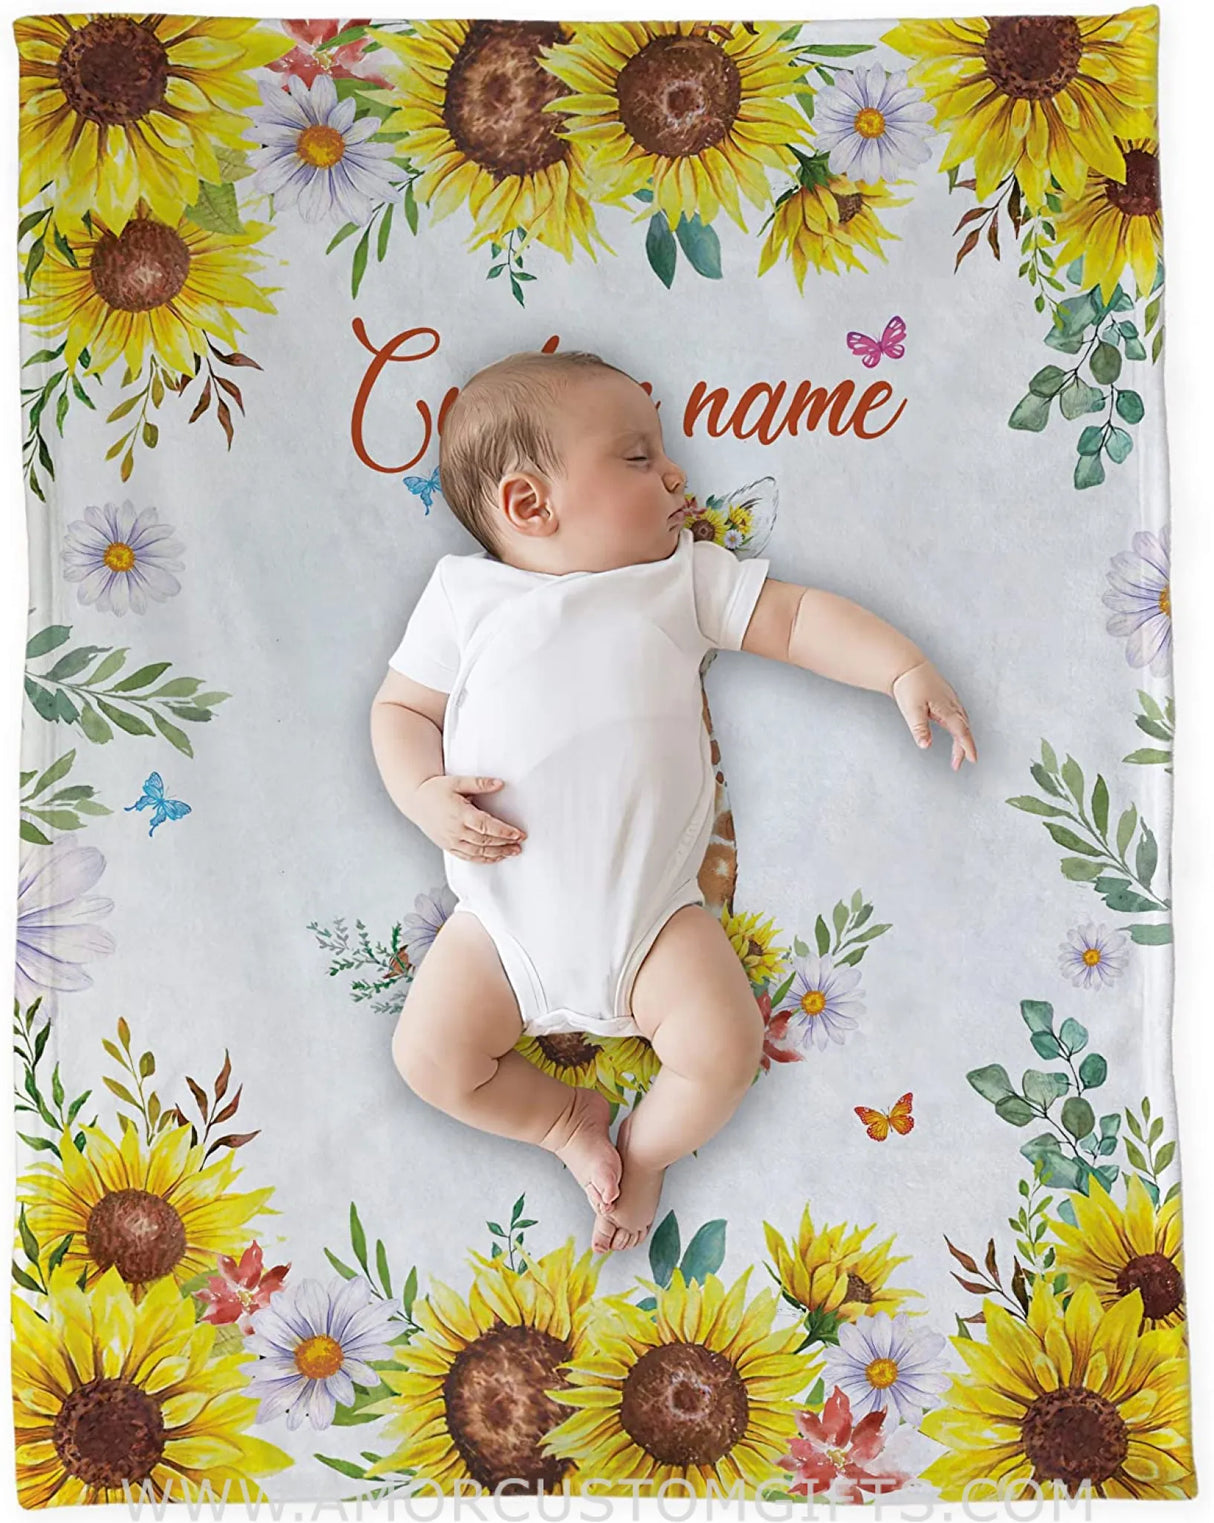 Blankets USA MADE Custom Baby Blanket, Personalized Baby Blankets, Baby Giraffe Blanket, Floral Baby Blanket, Sunflower Baby Blanket